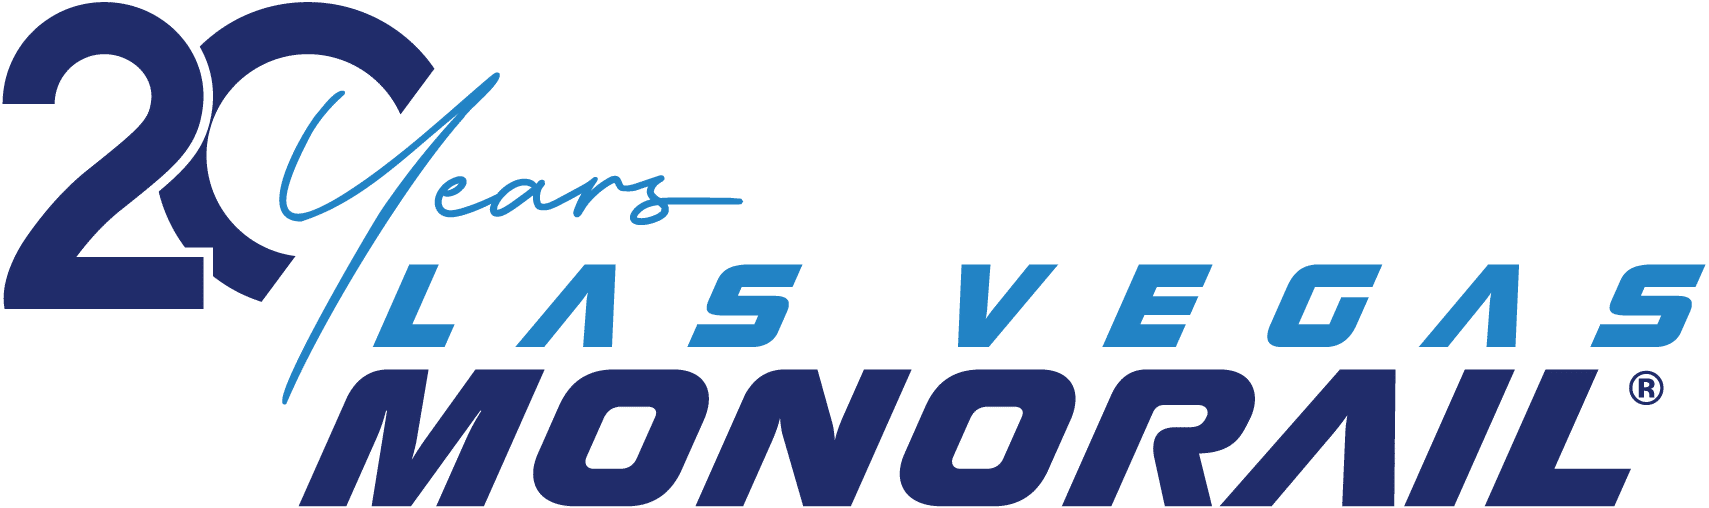 Las Vegas Monorail logo in white